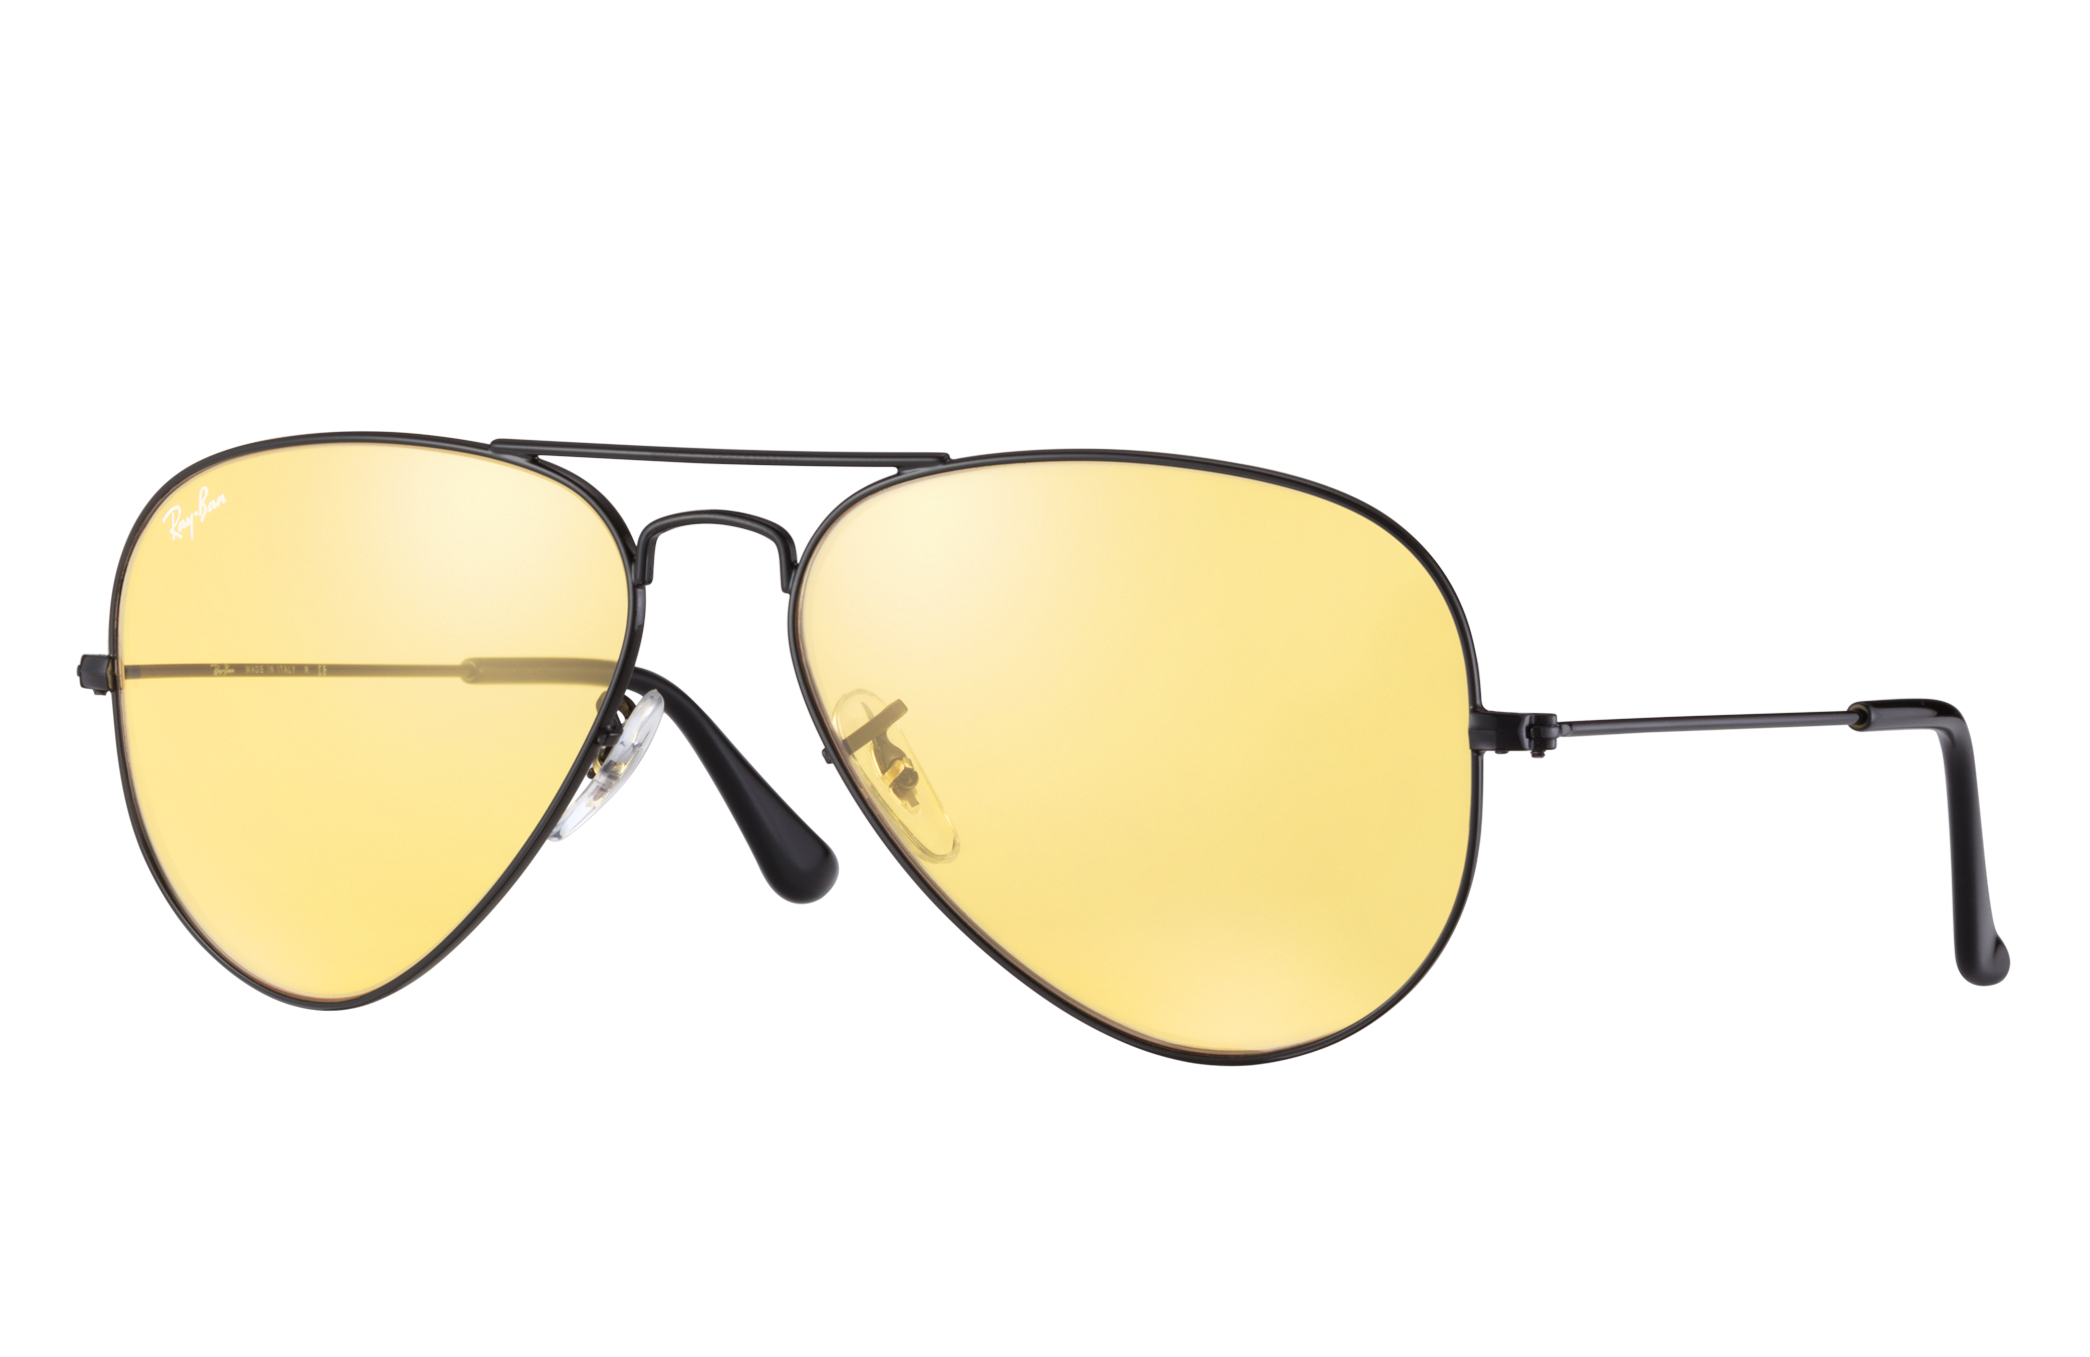 Aviator Ambermatic Ltd Sunglasses in Black and Yellow | Ray-Ban®